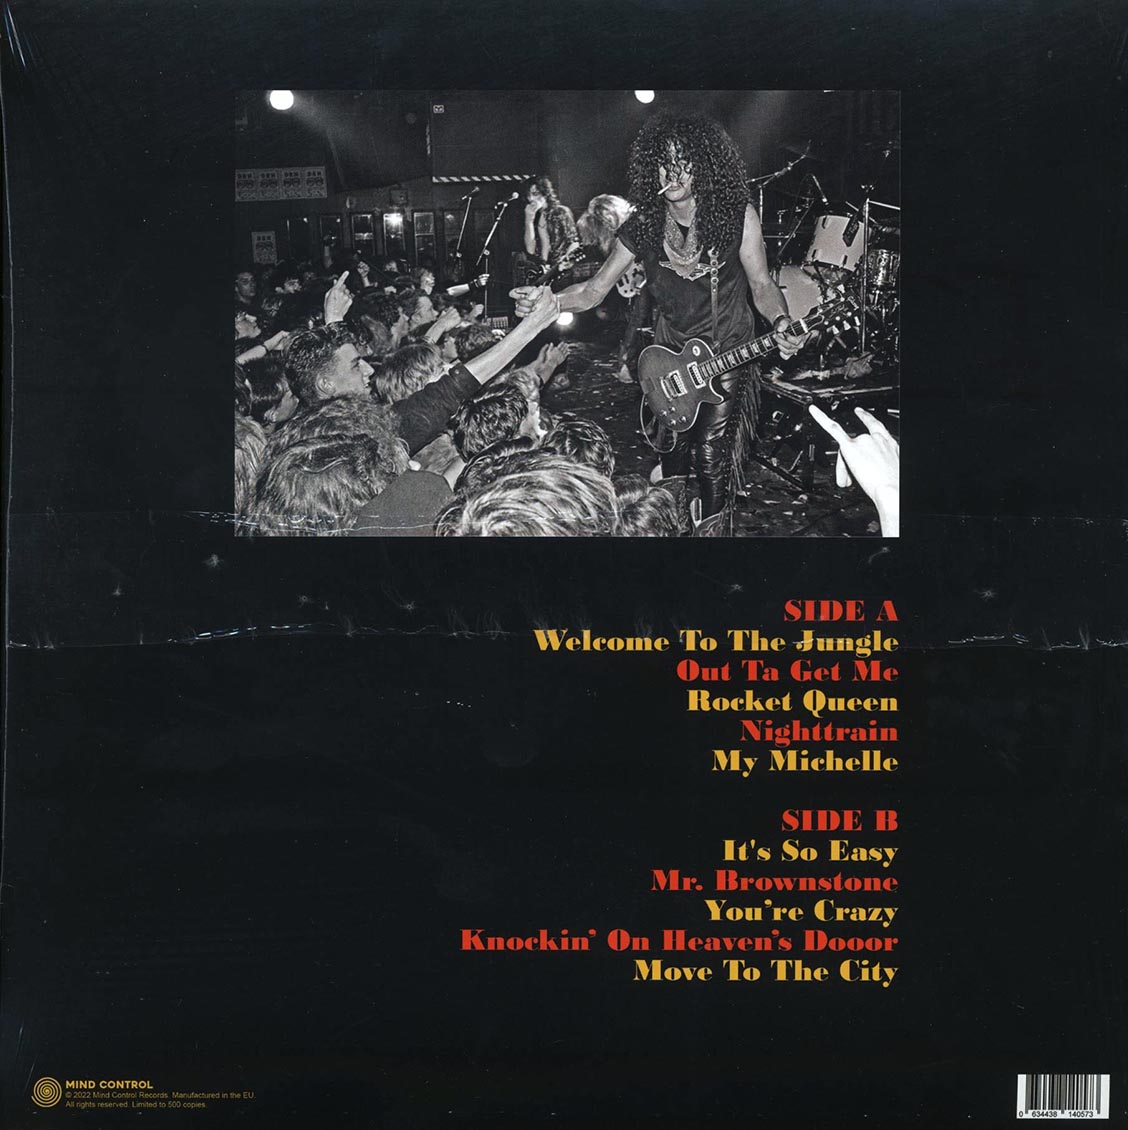 Guns N' Roses - Knockin' On Marquee's Door: Live In London, England, 19th June 1987 FM Broadcast (ltd. 500 copies made) - Vinyl LP, LP